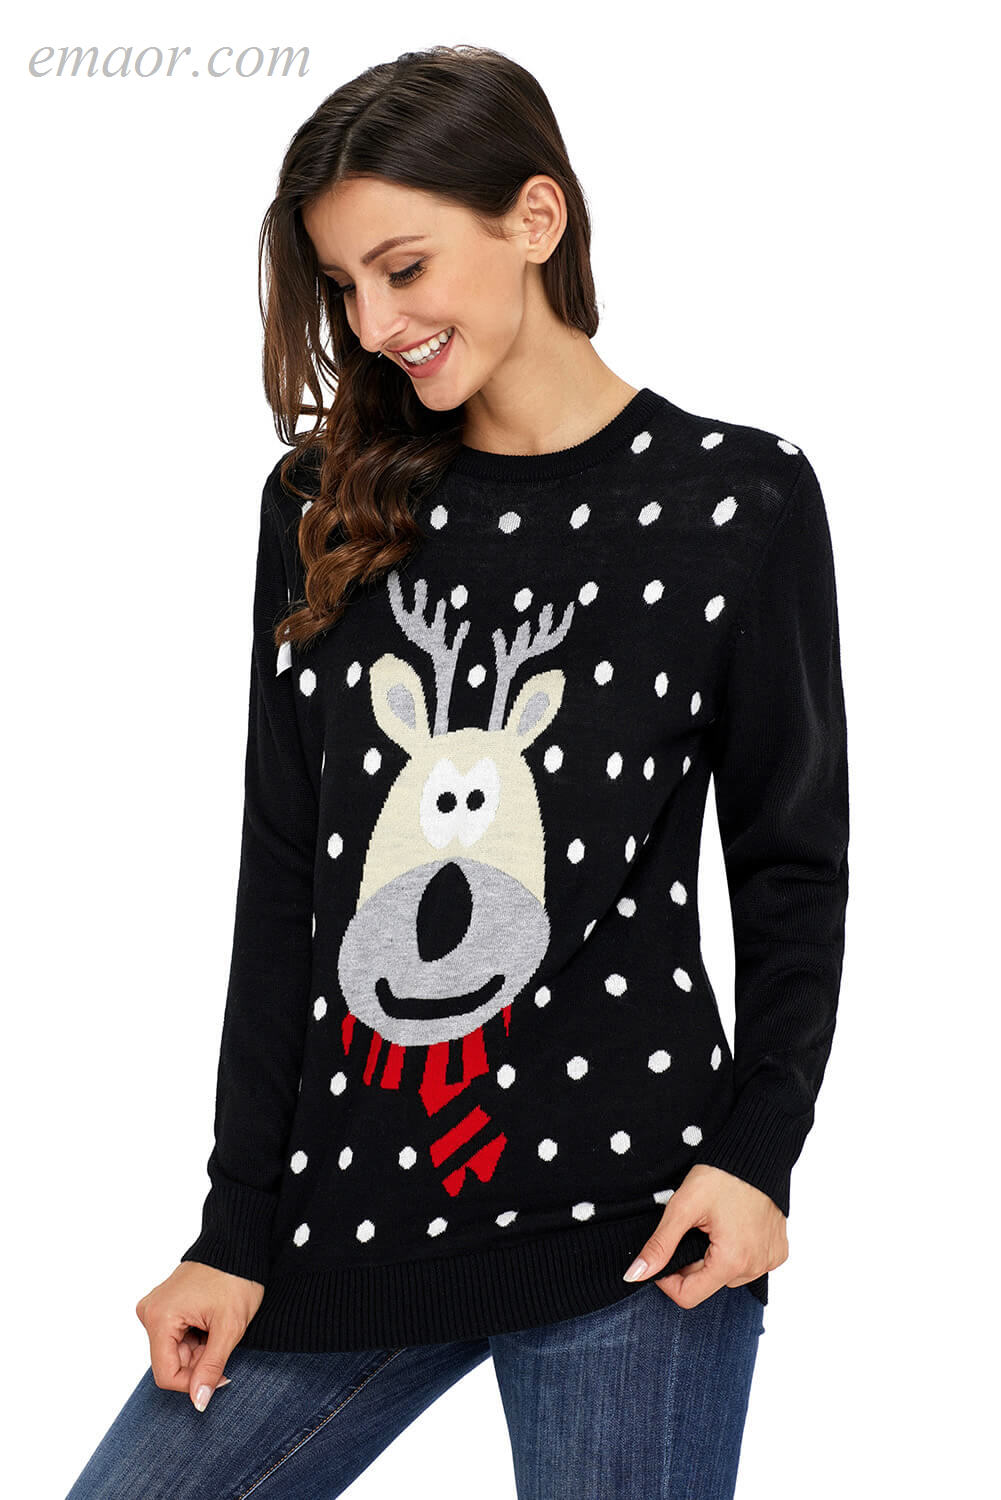 Sweaters Best Lightweight Christmas Reindeer Sweaters for Women on Sale Sweaters